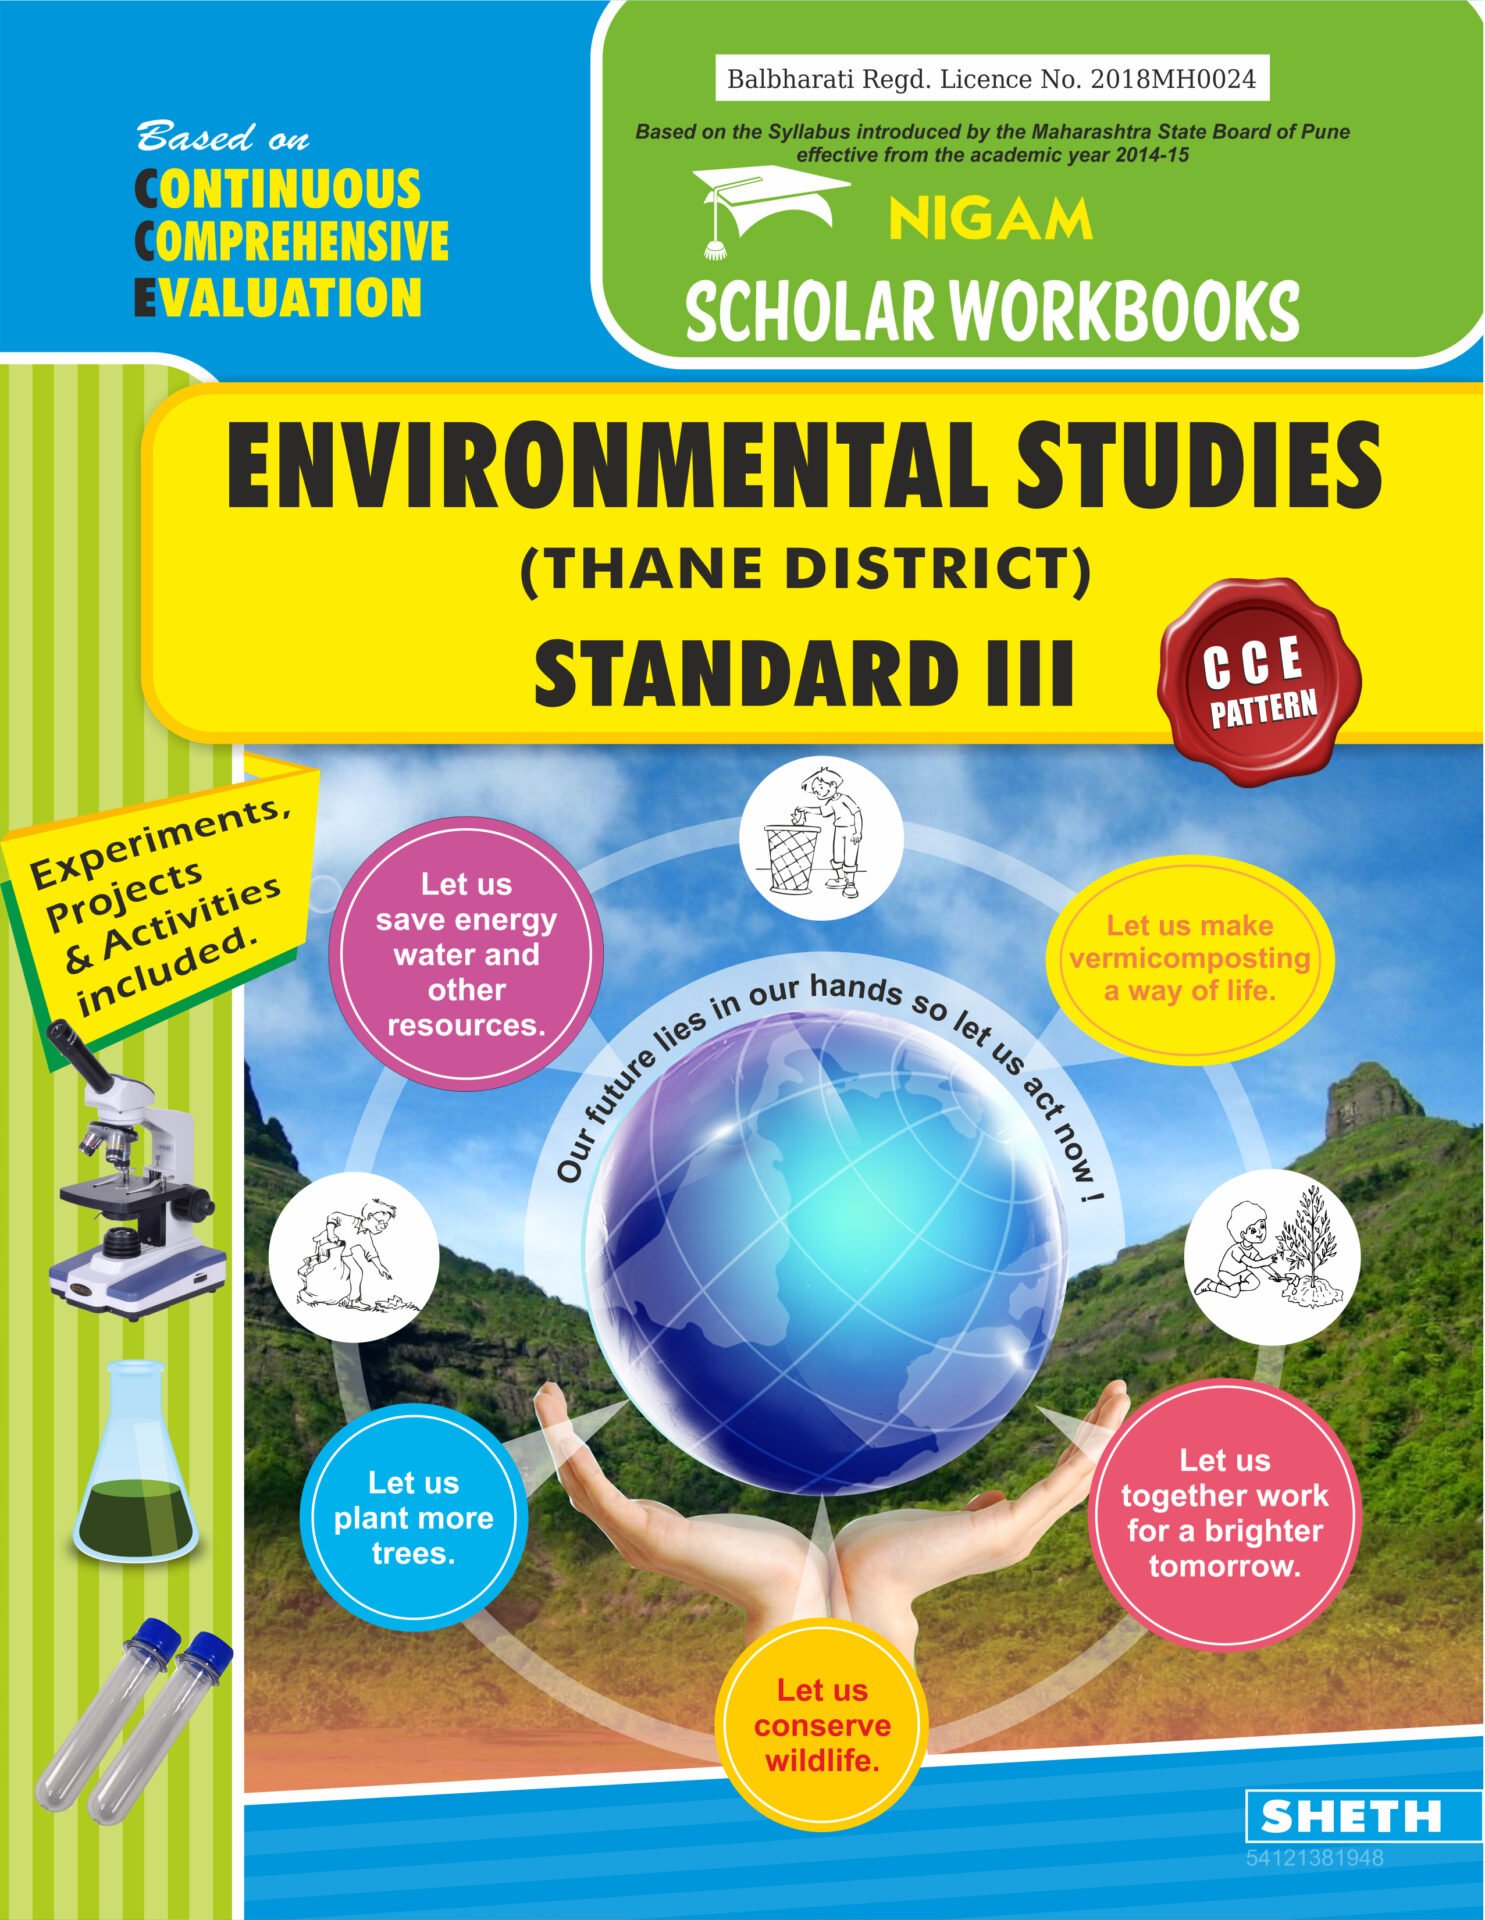 CCE Pattern Nigam Scholar Workbooks Environmental Studies Thane District Standard 3 1